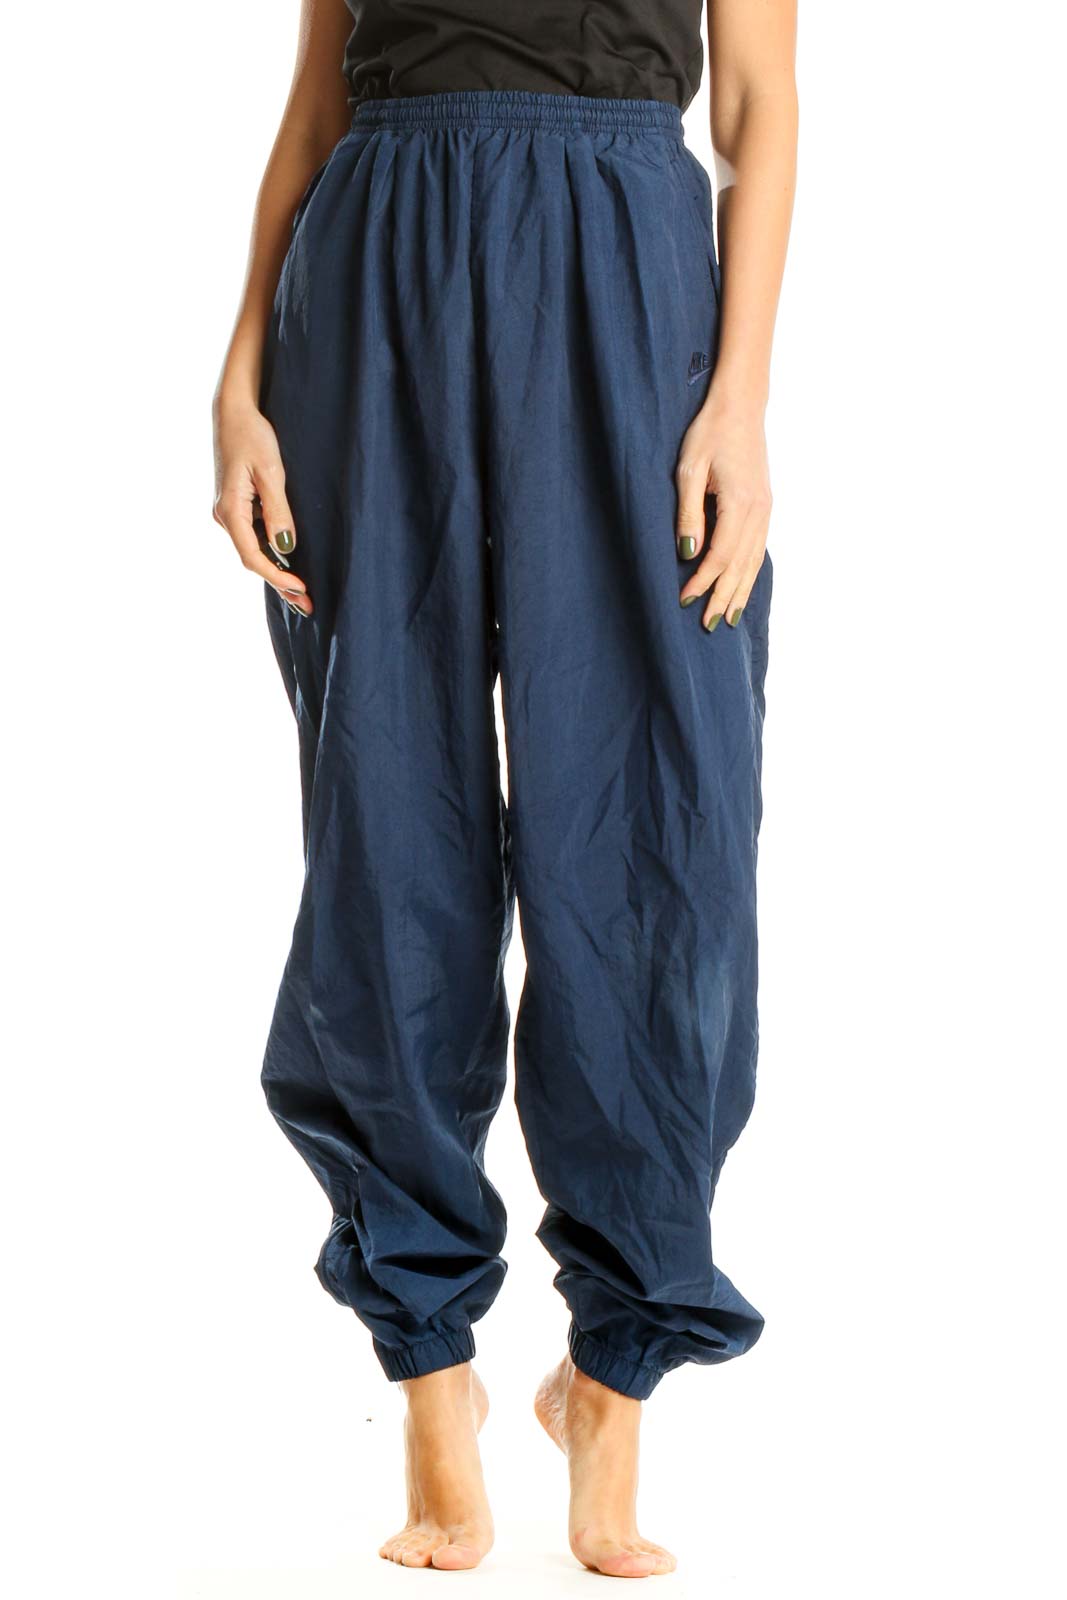 Blue Casual Sweatpants Front